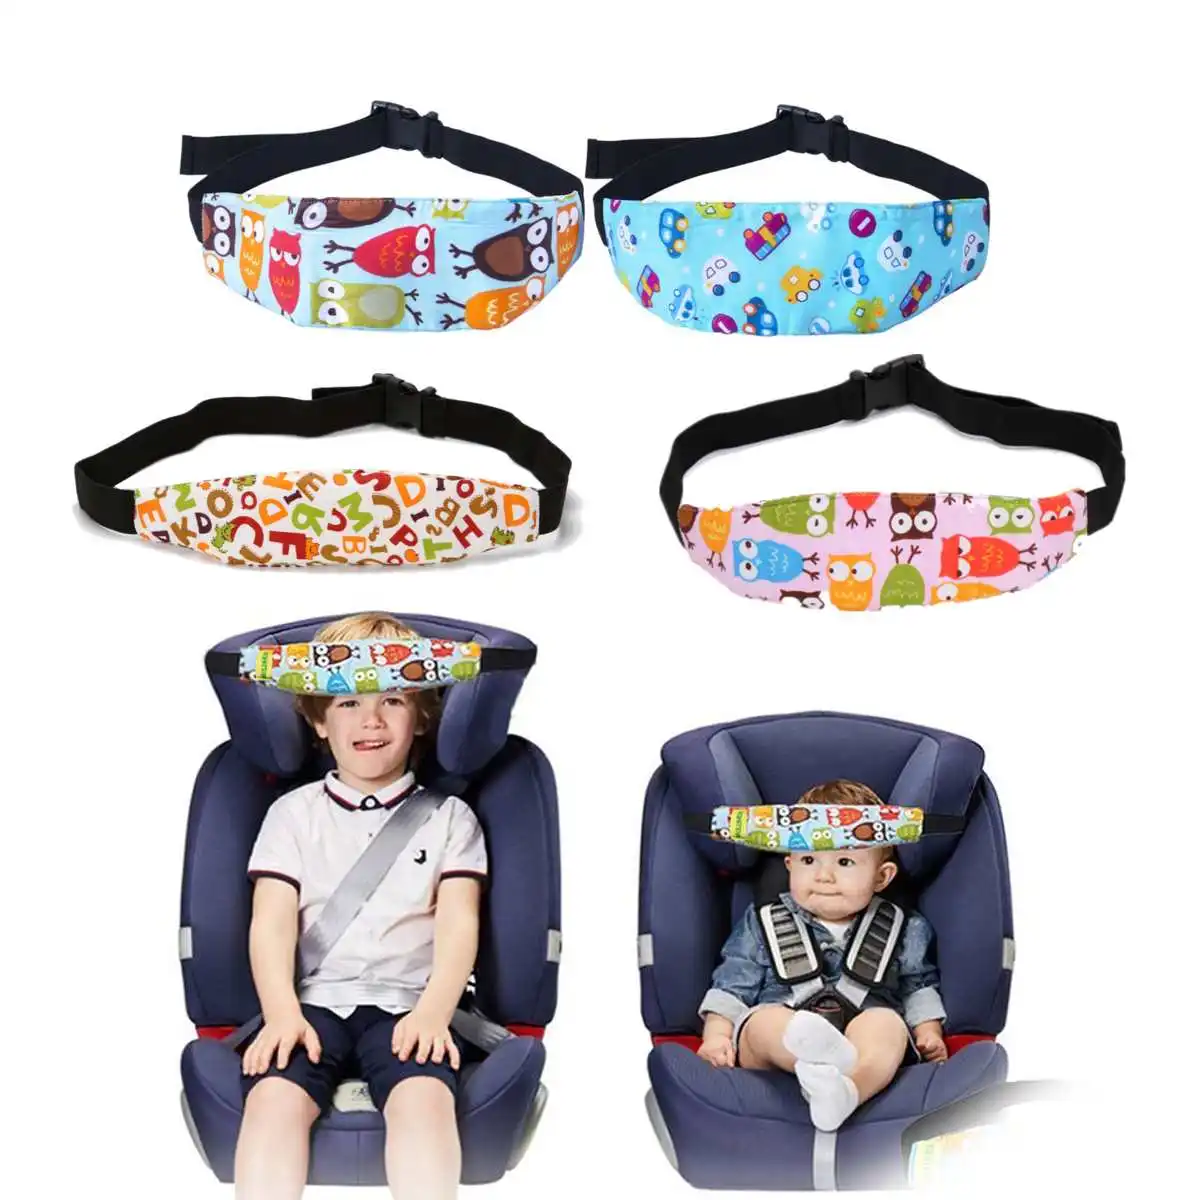 Safety Car Seat Sleep Nap Aid Child Kid Head Support Holder Protector Belt Stroller